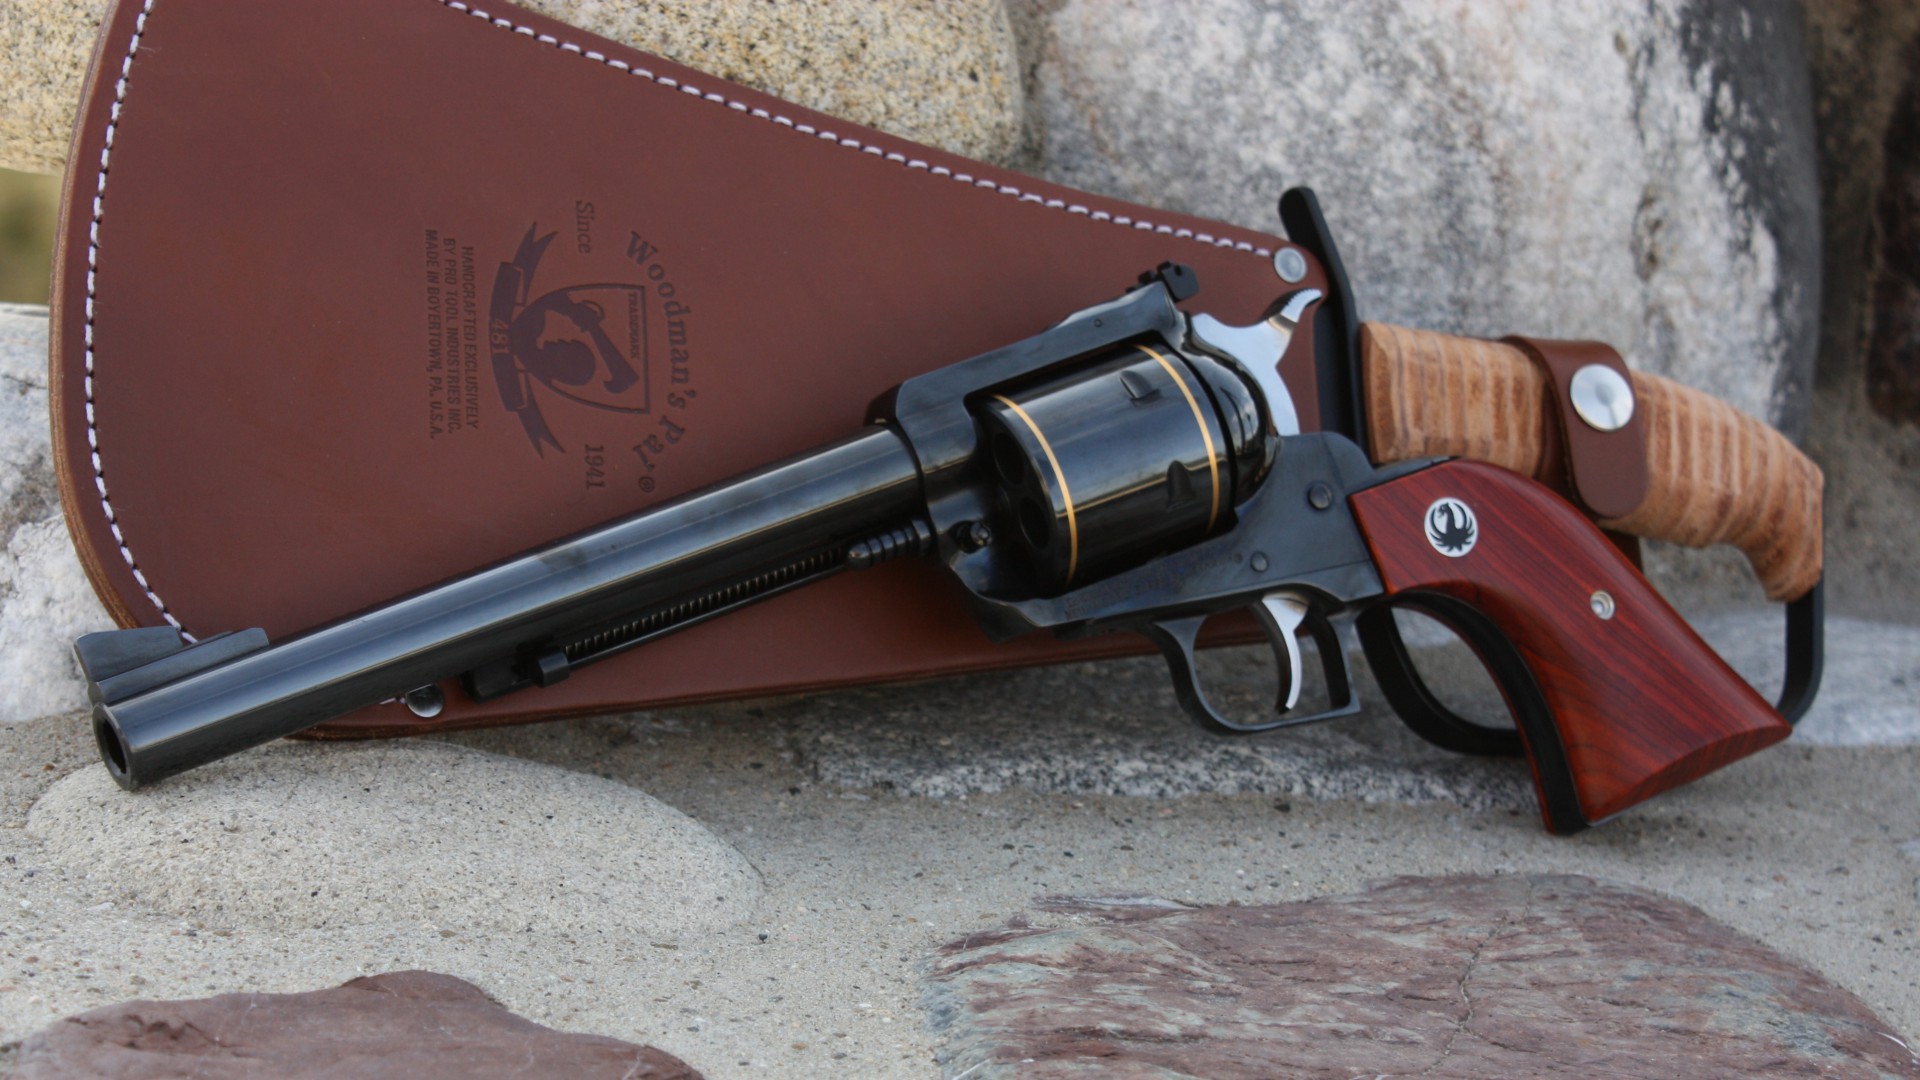 Магнум 44, револьвер, Ruger Super Blackhawk .44 Magnum, revolver, review (horizontal)